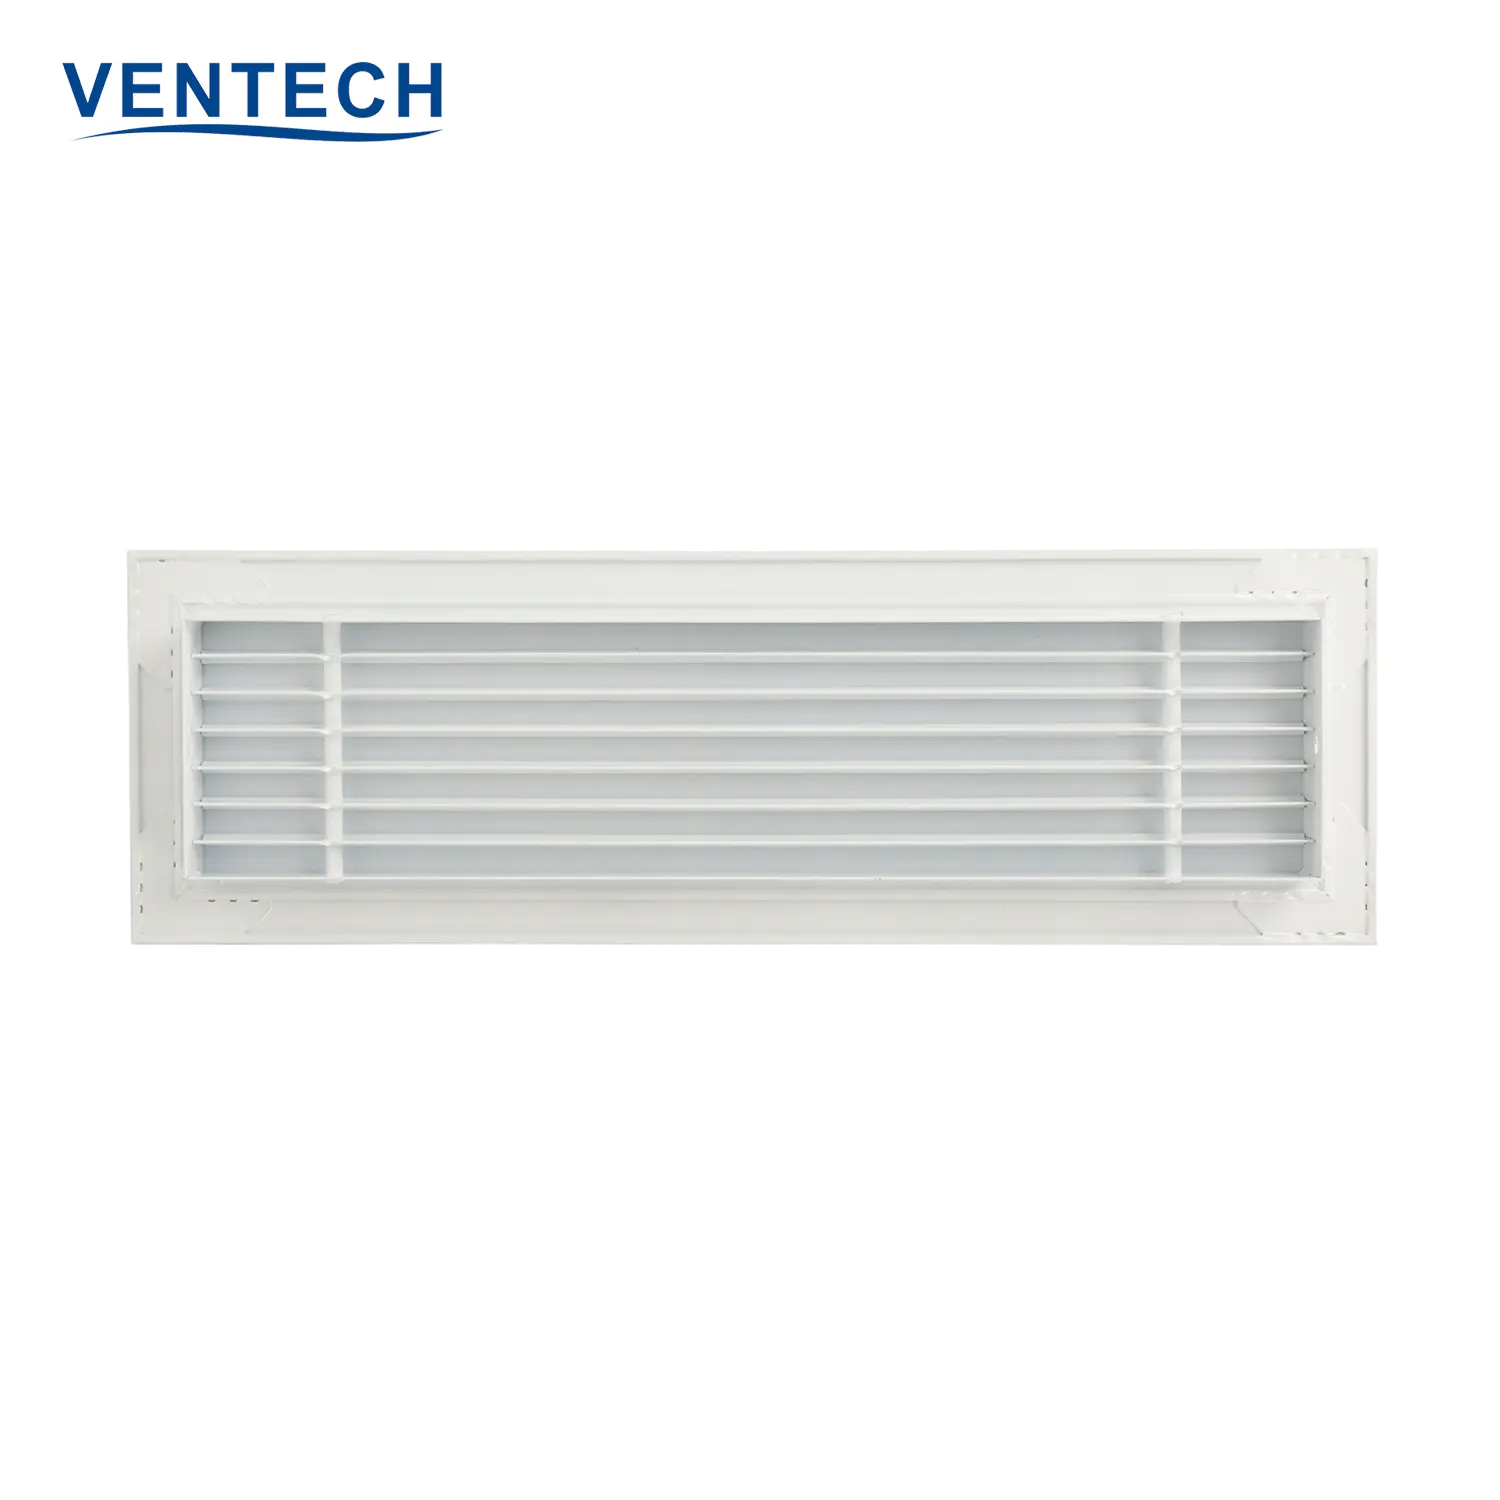 Ventech Ceiling Air Conditioner Decorative Air Grille Aluminum Linear Bar Grille